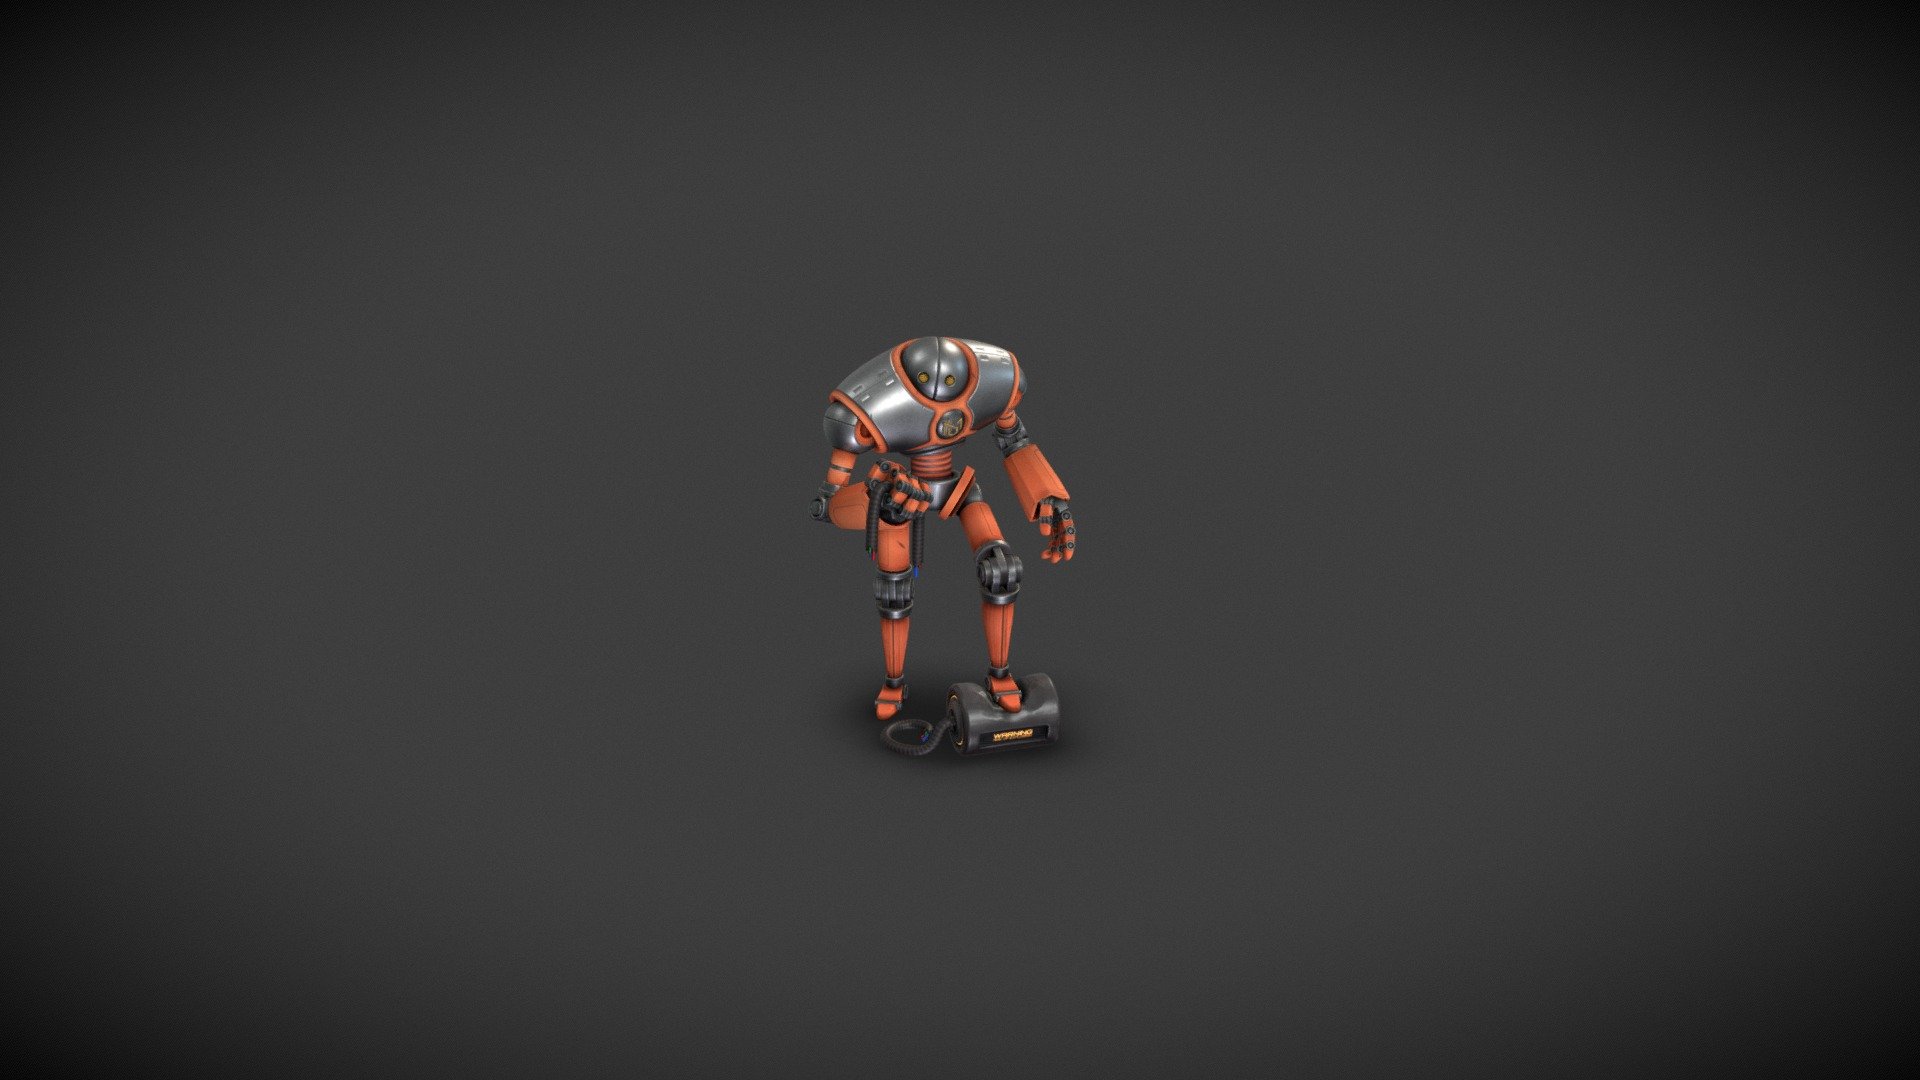 Mever - Guardian robot - 3D model by Maksym Boiev (@maksymboiev) 3d model